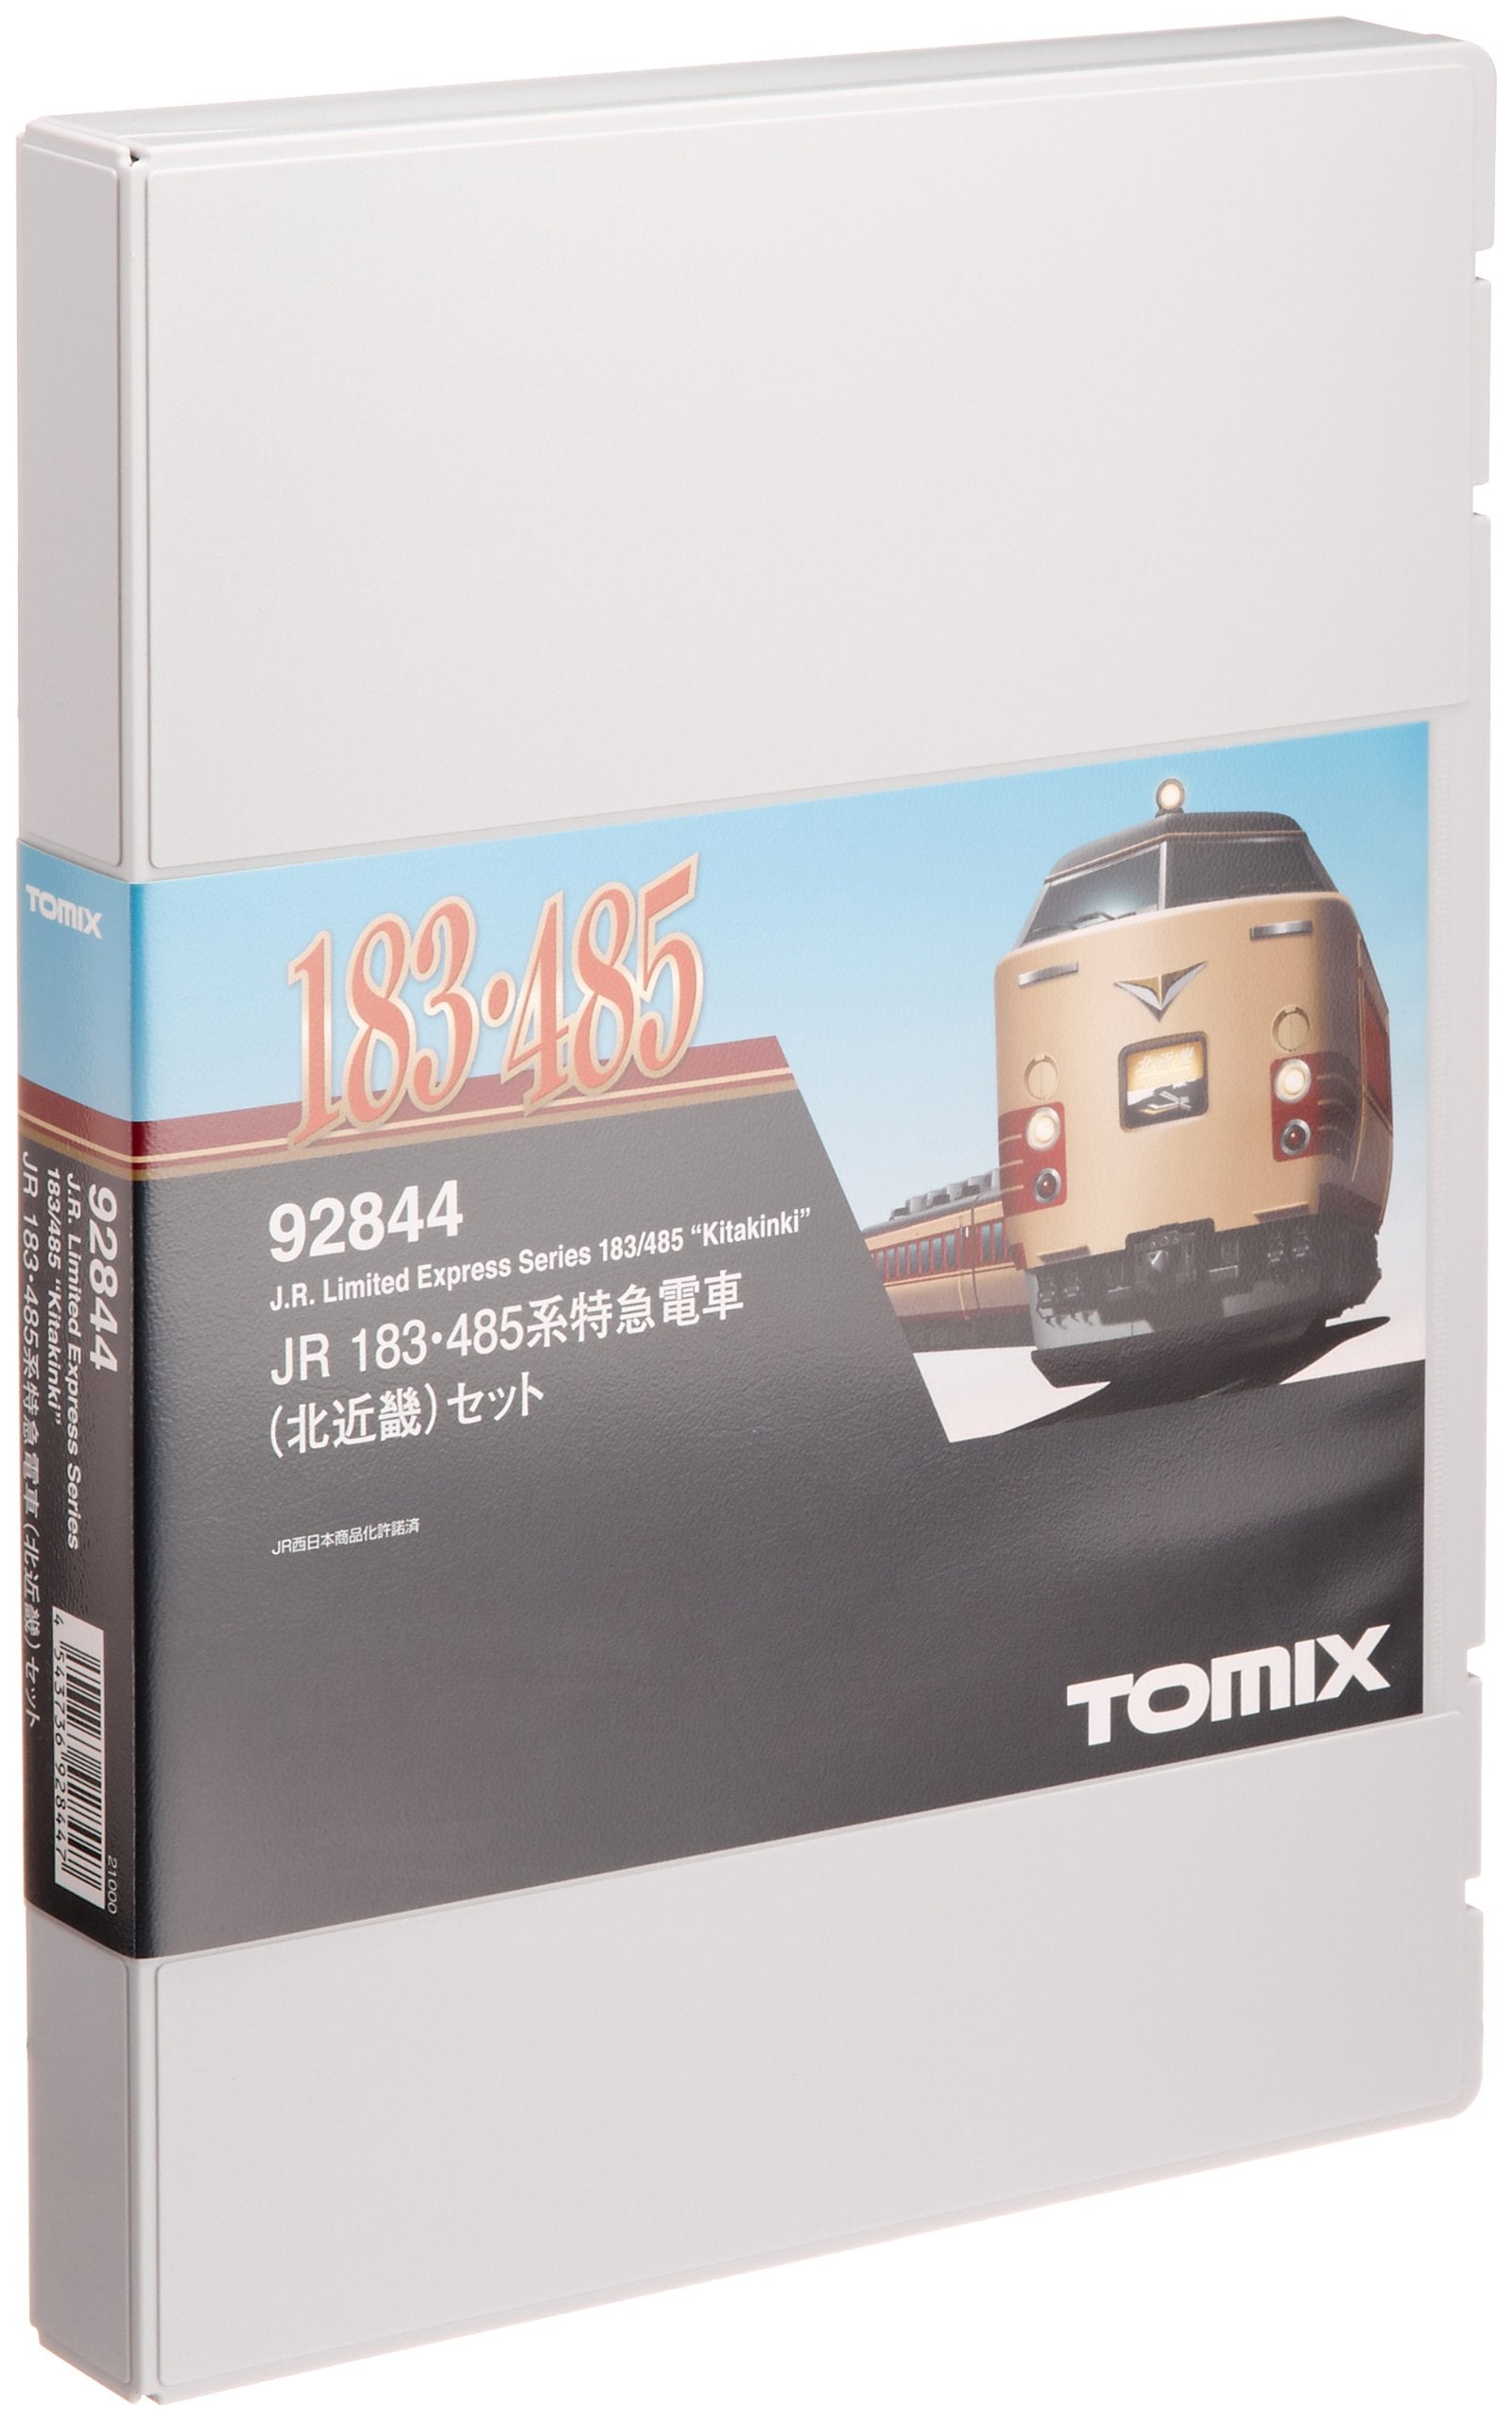 Tomytec Tomix 183 485 Series Kita Kinki 92844 N Gauge Railway Model Train